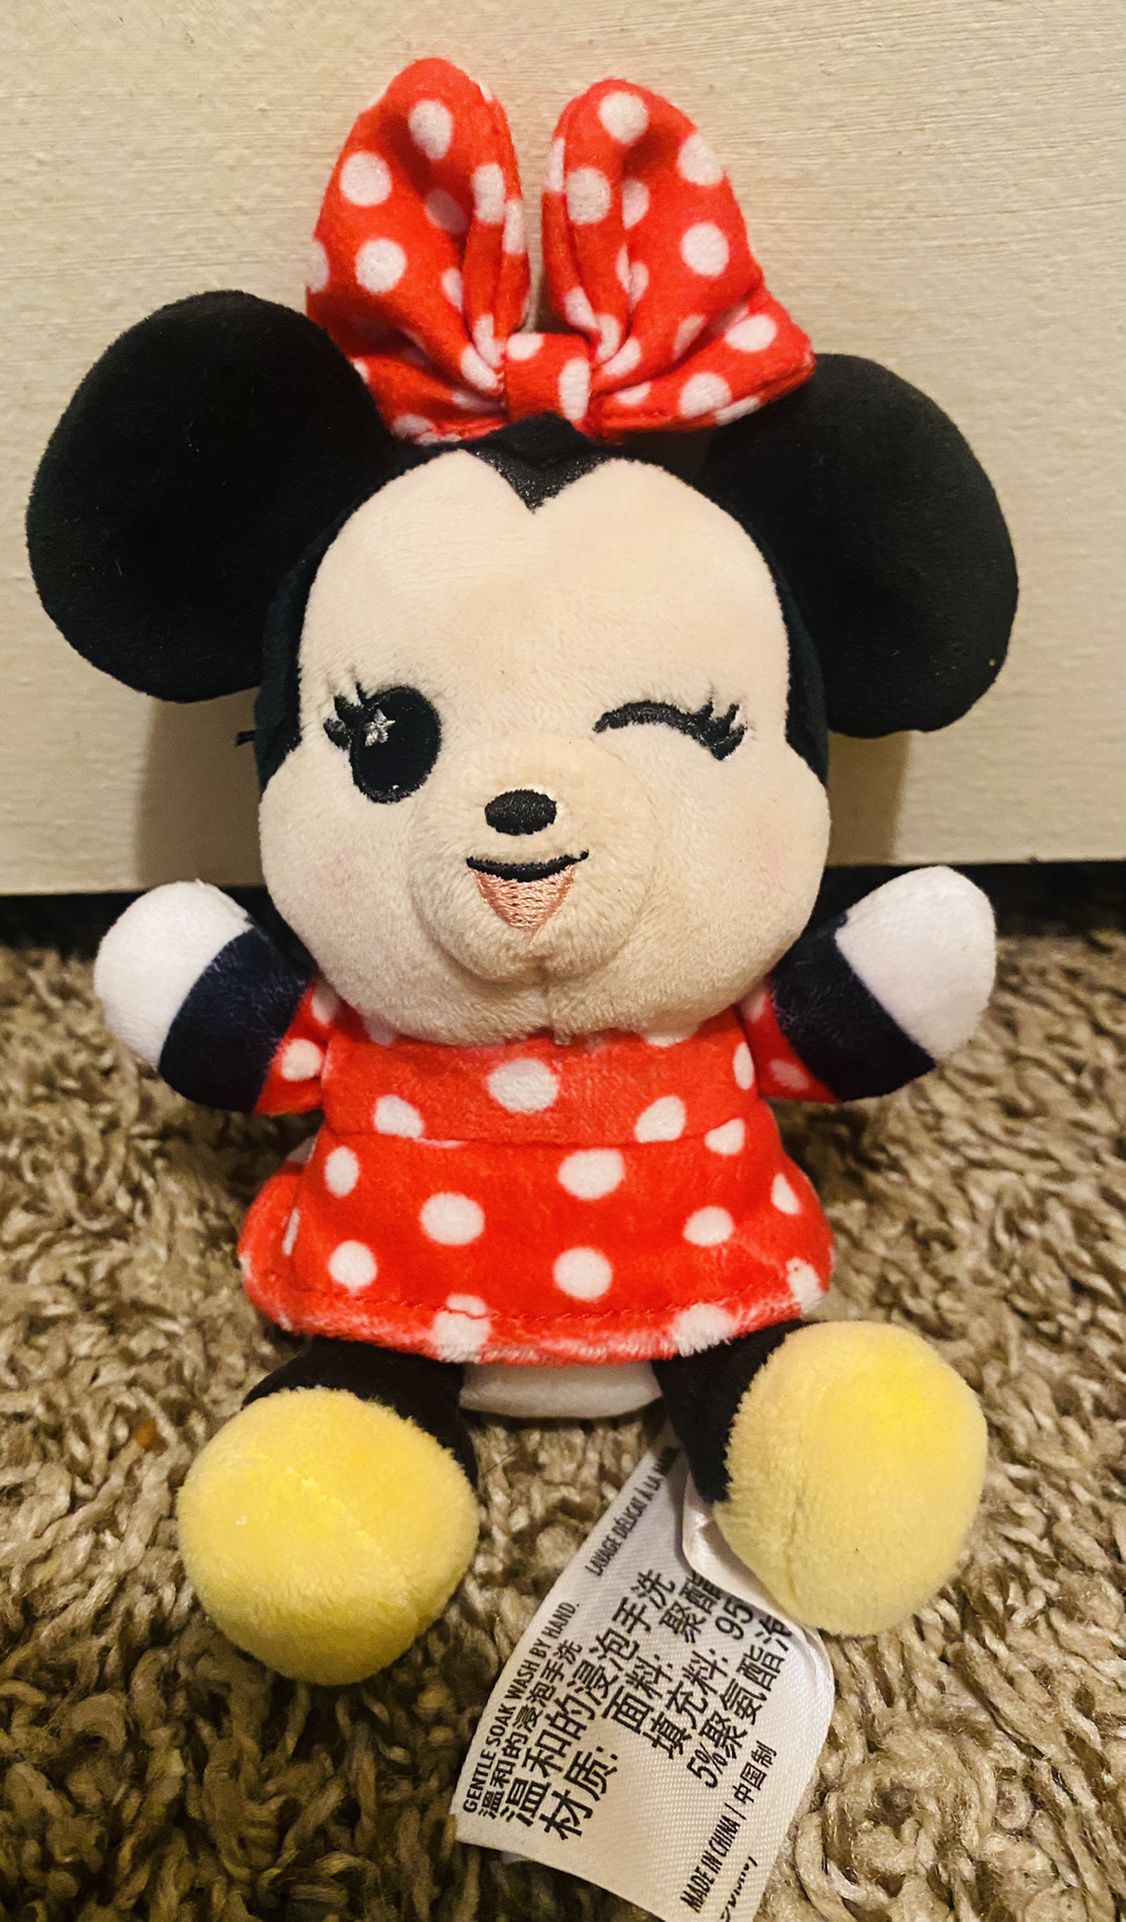 Disney Parks Wishables Minnie Mouse Red Classic White Polka Dot Mini Plush